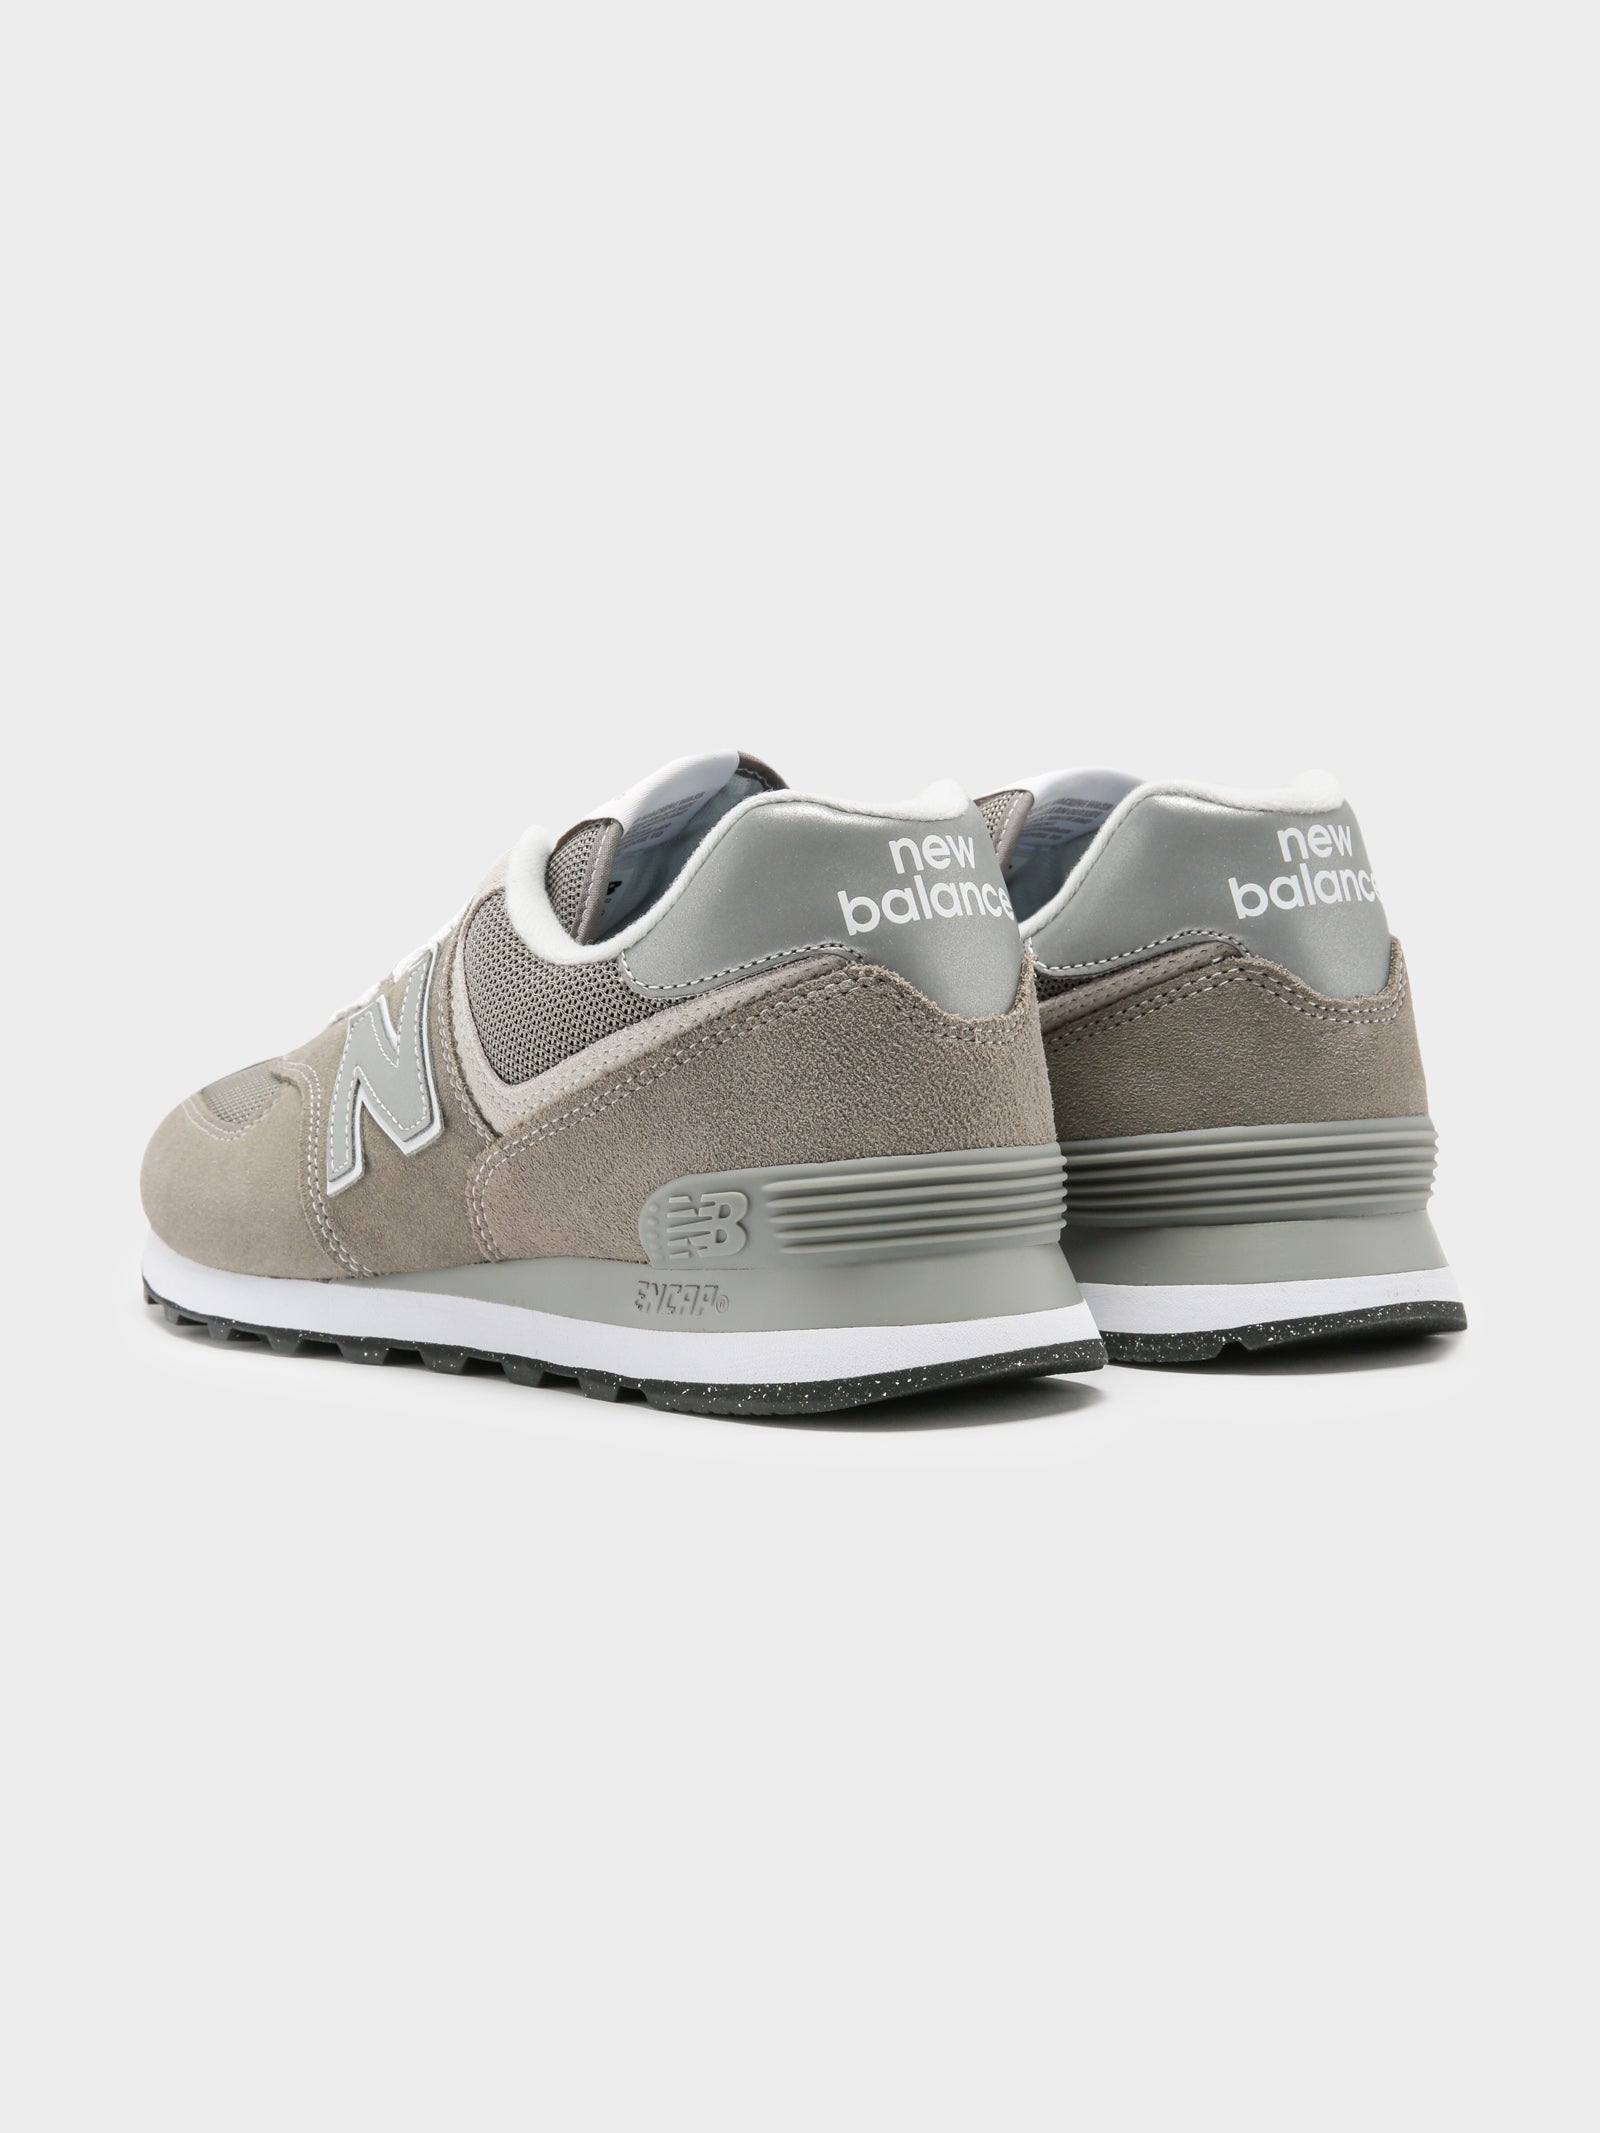 Mens 574 Sneakers in Grey